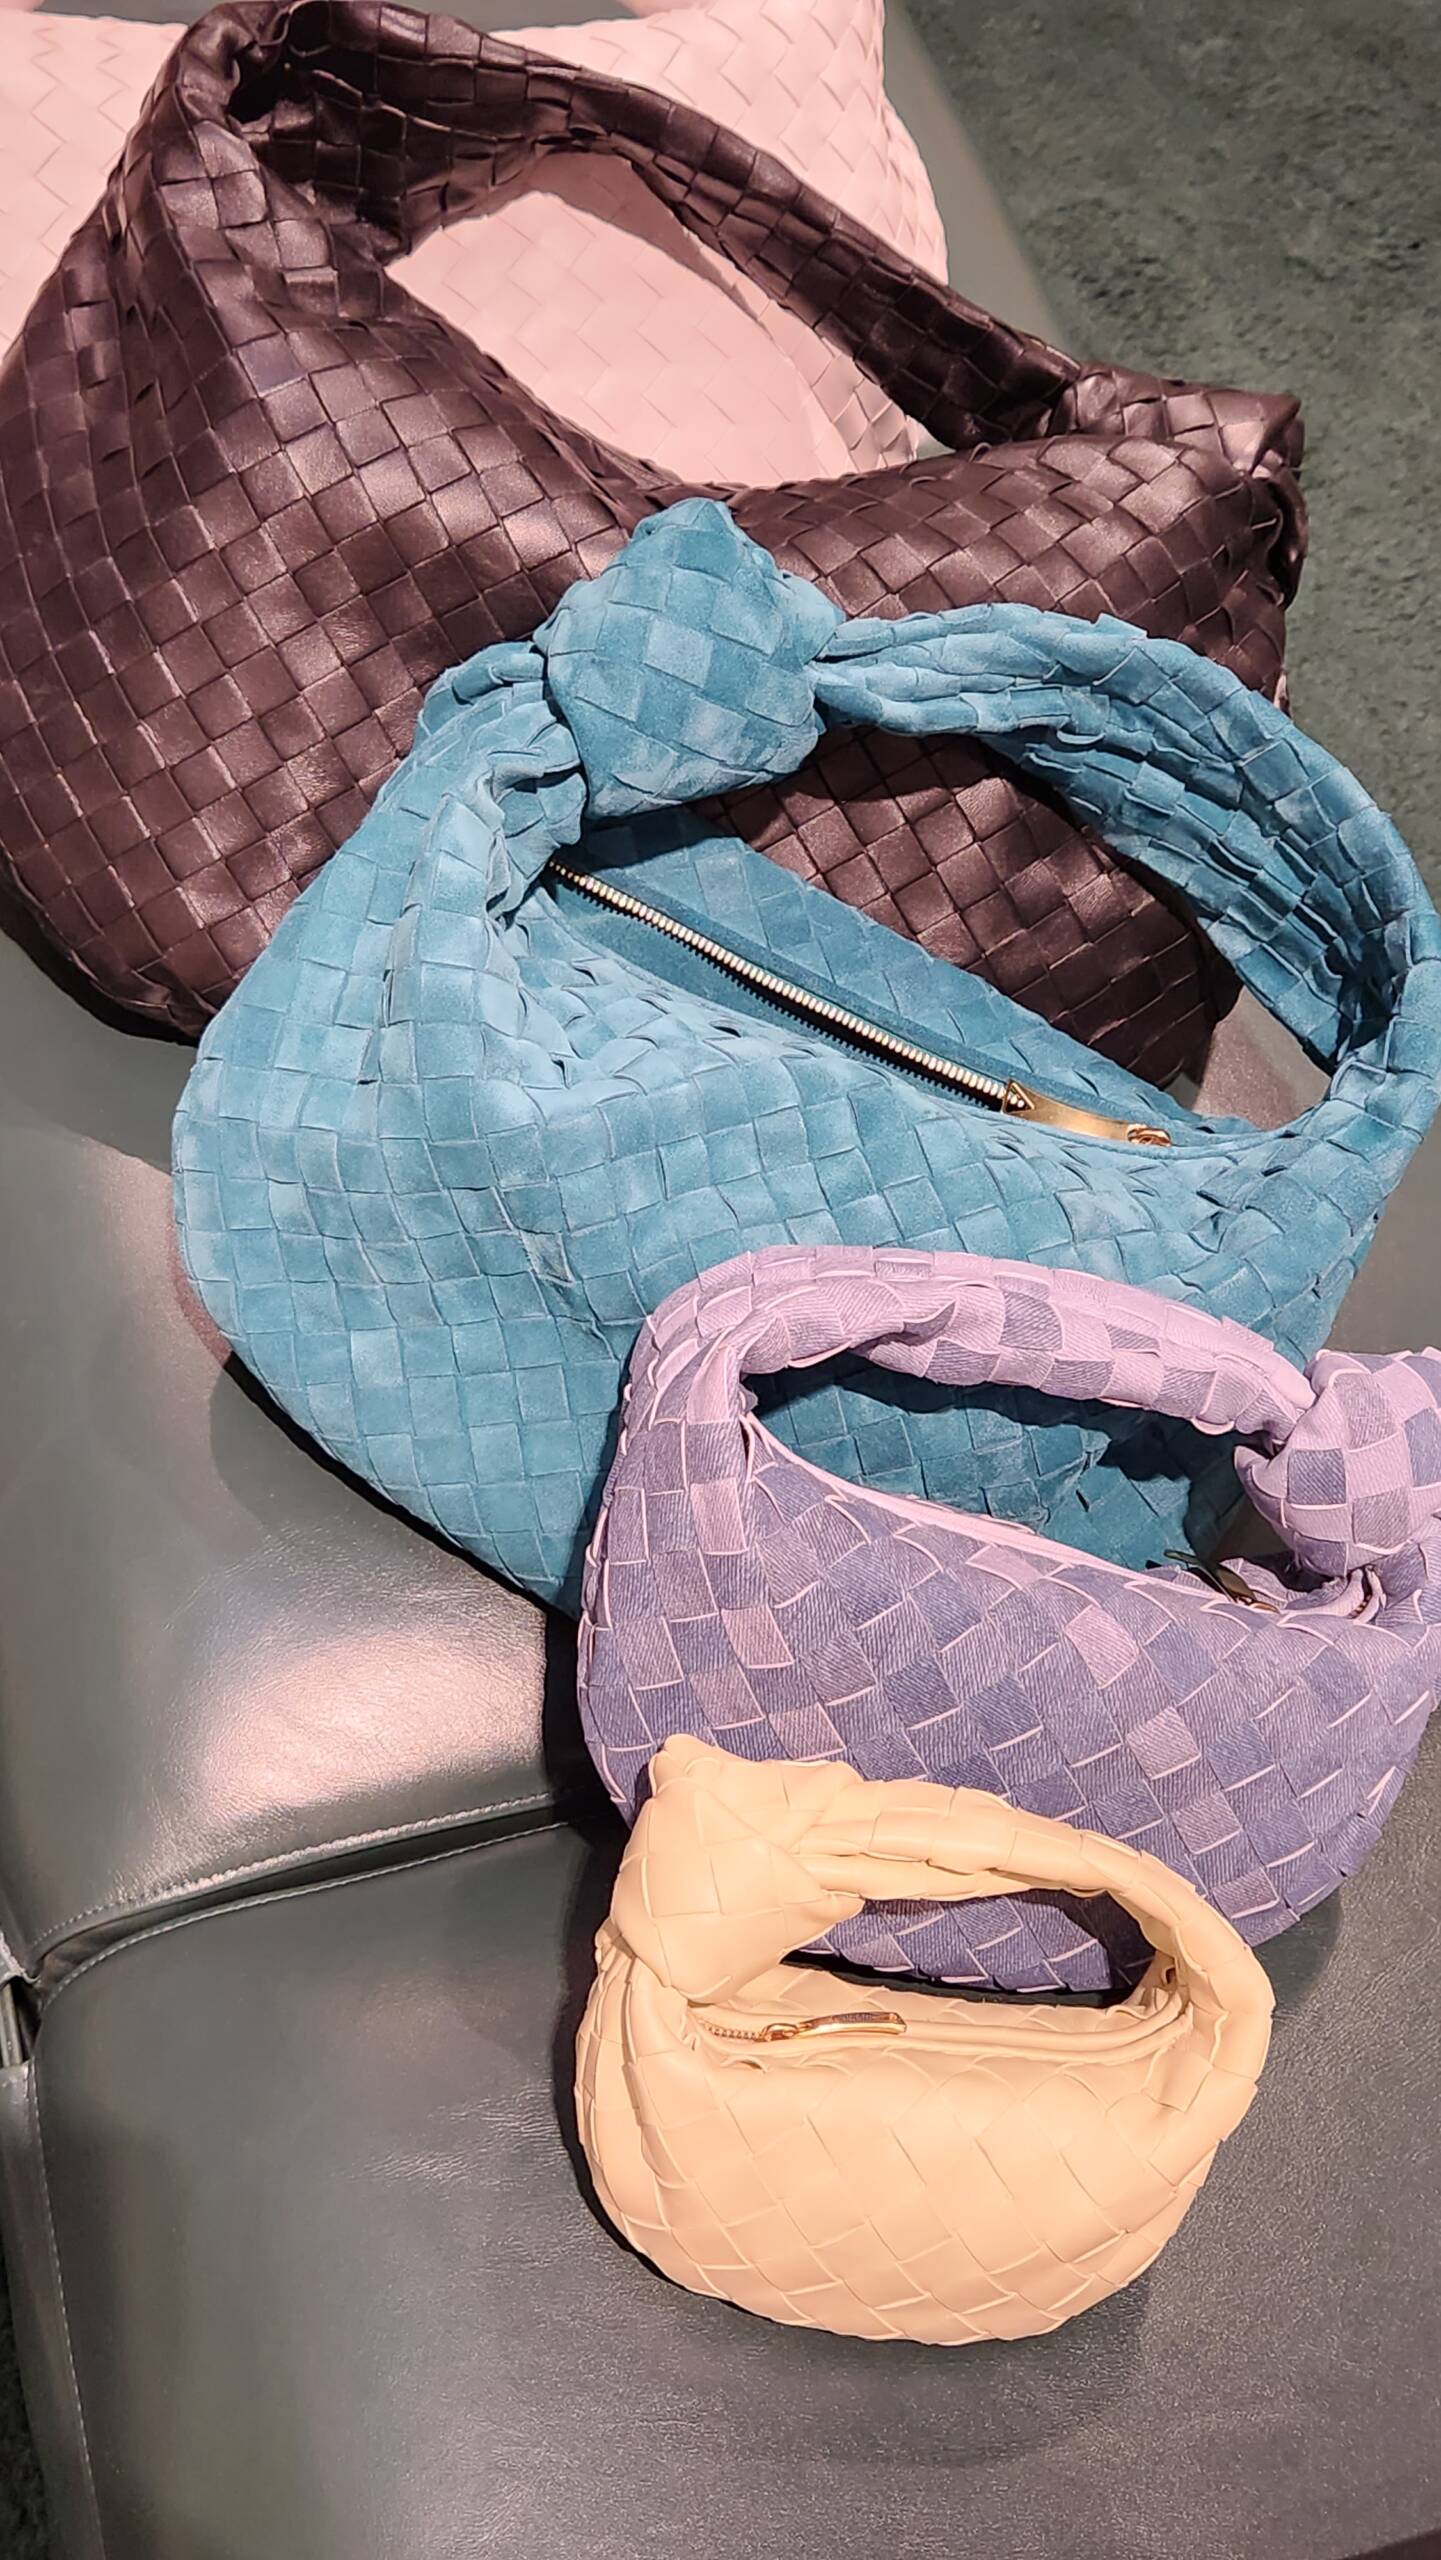 The Bottega Veneta Jodie Bag: Styles, Sizes & Colors - Academy by